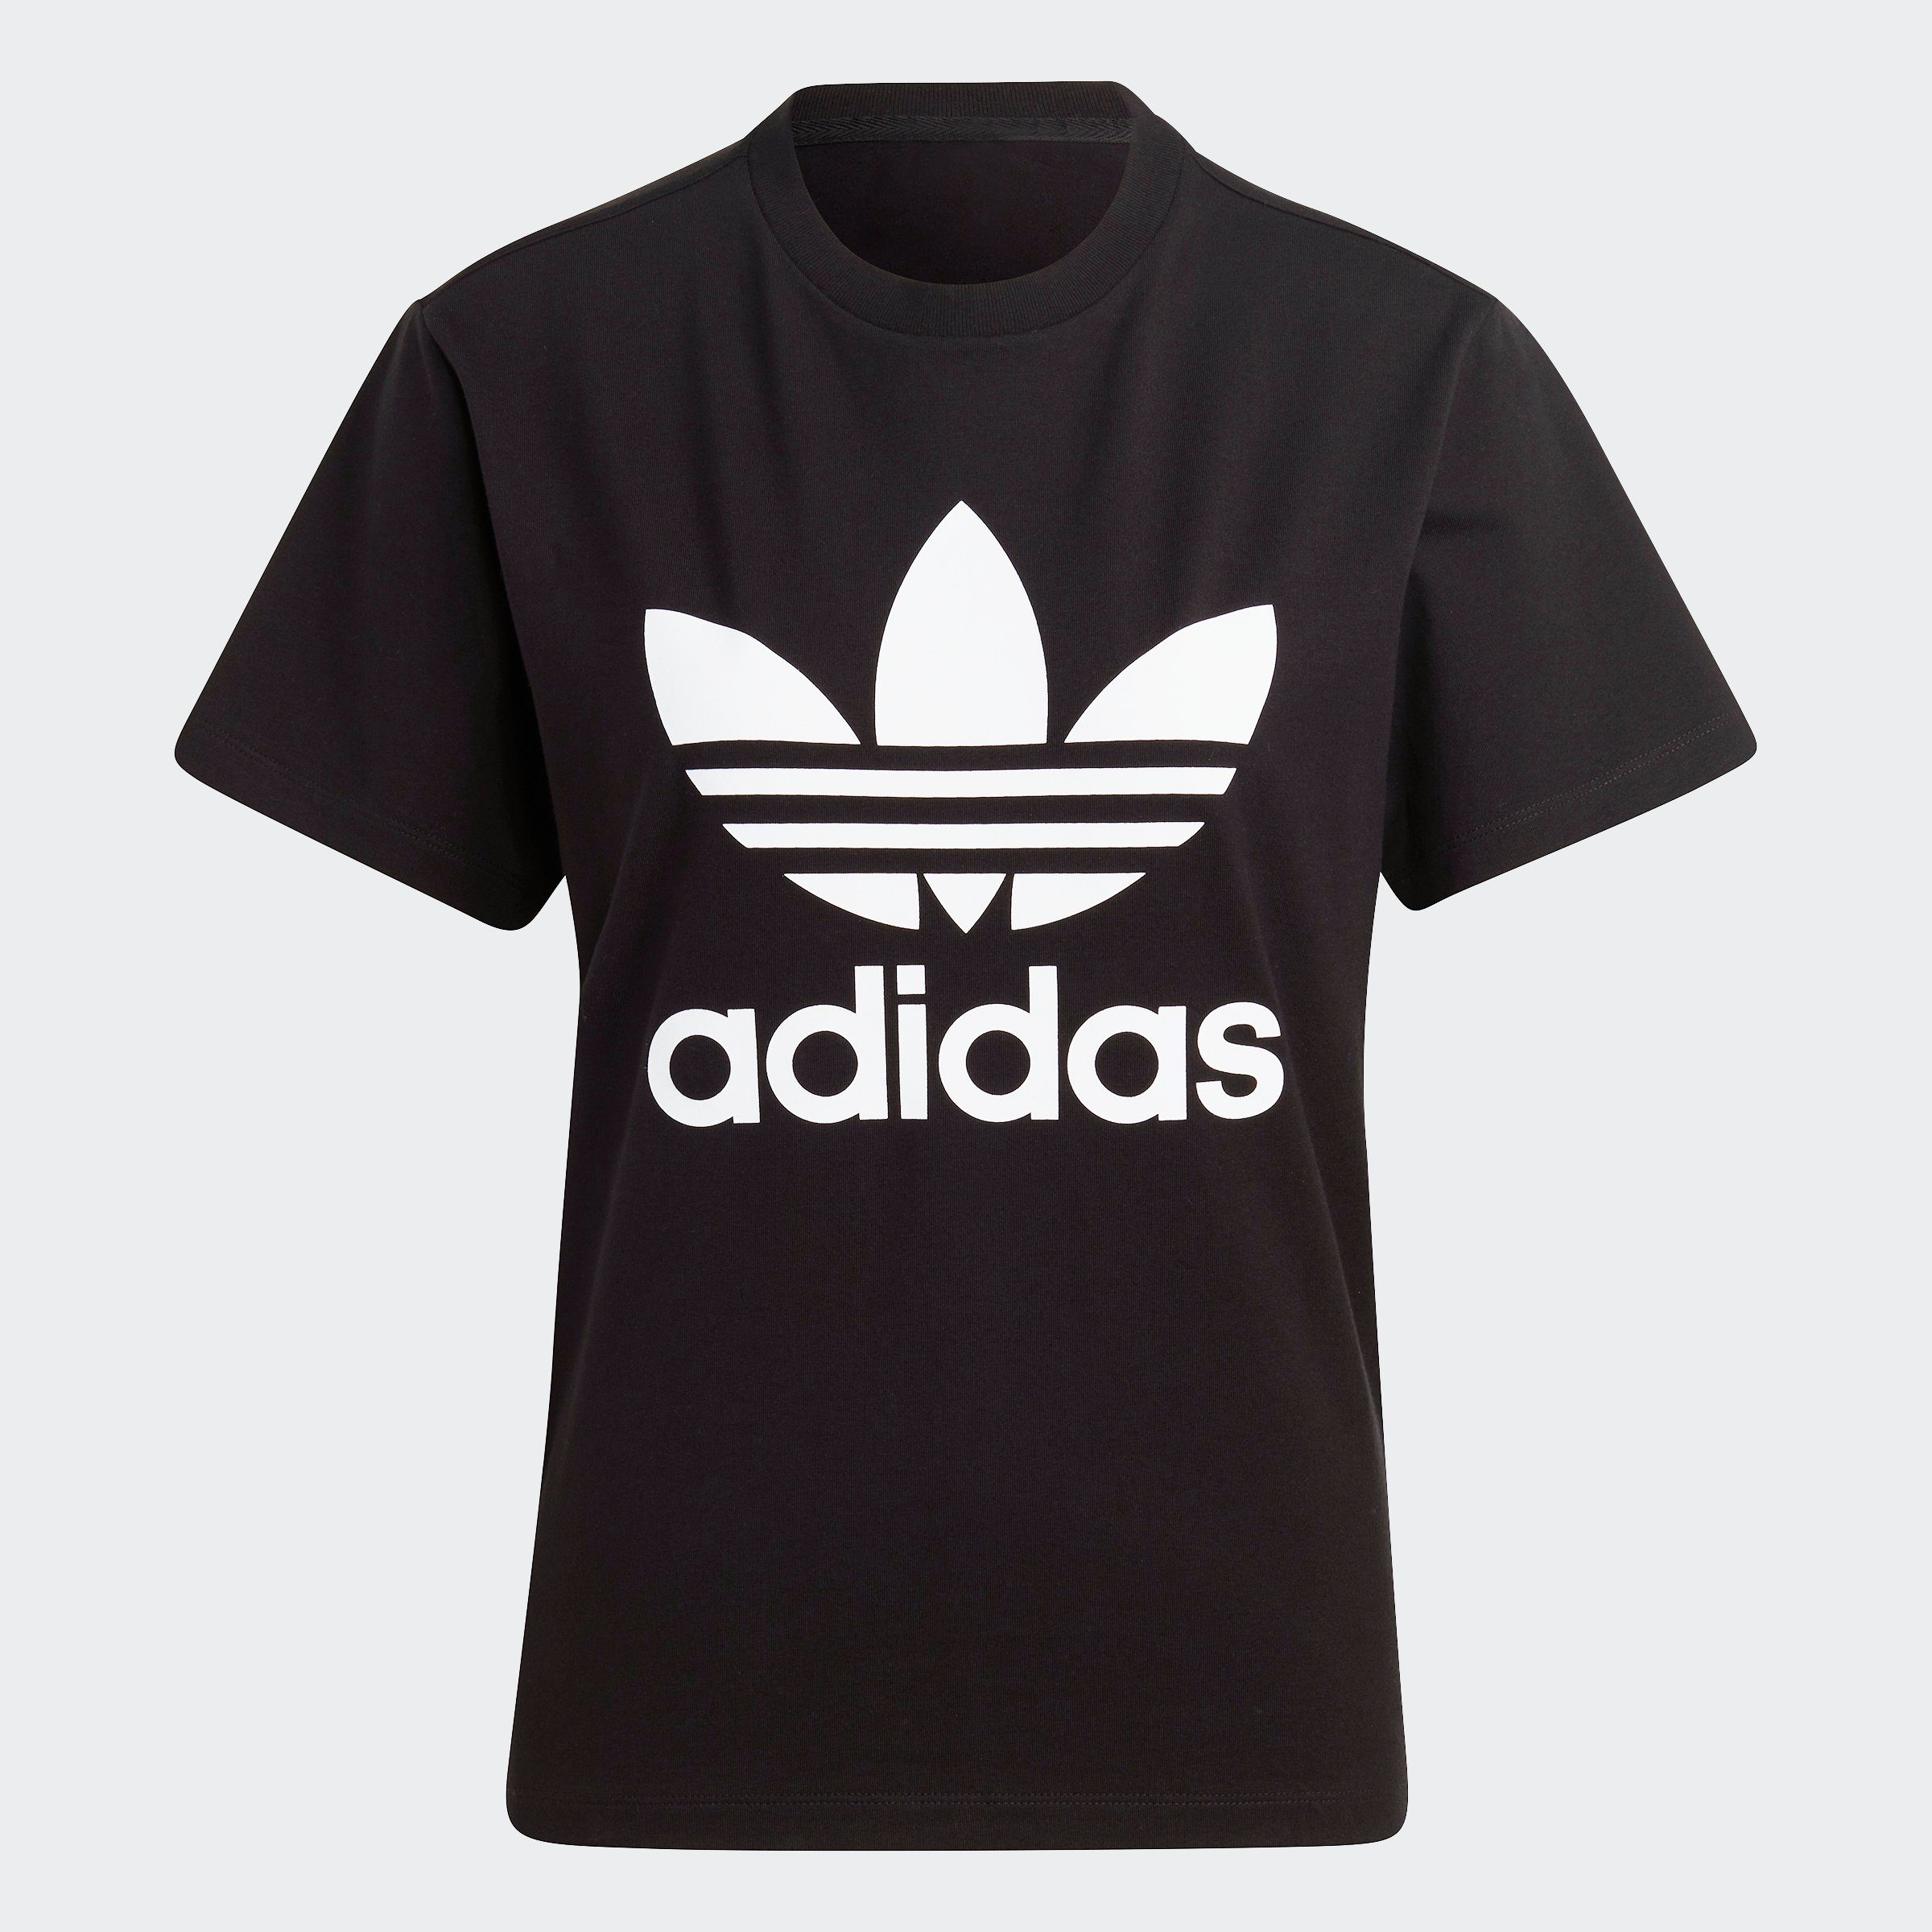 ADICOLOR CLASSICS Originals T-Shirt Black adidas TREFOIL